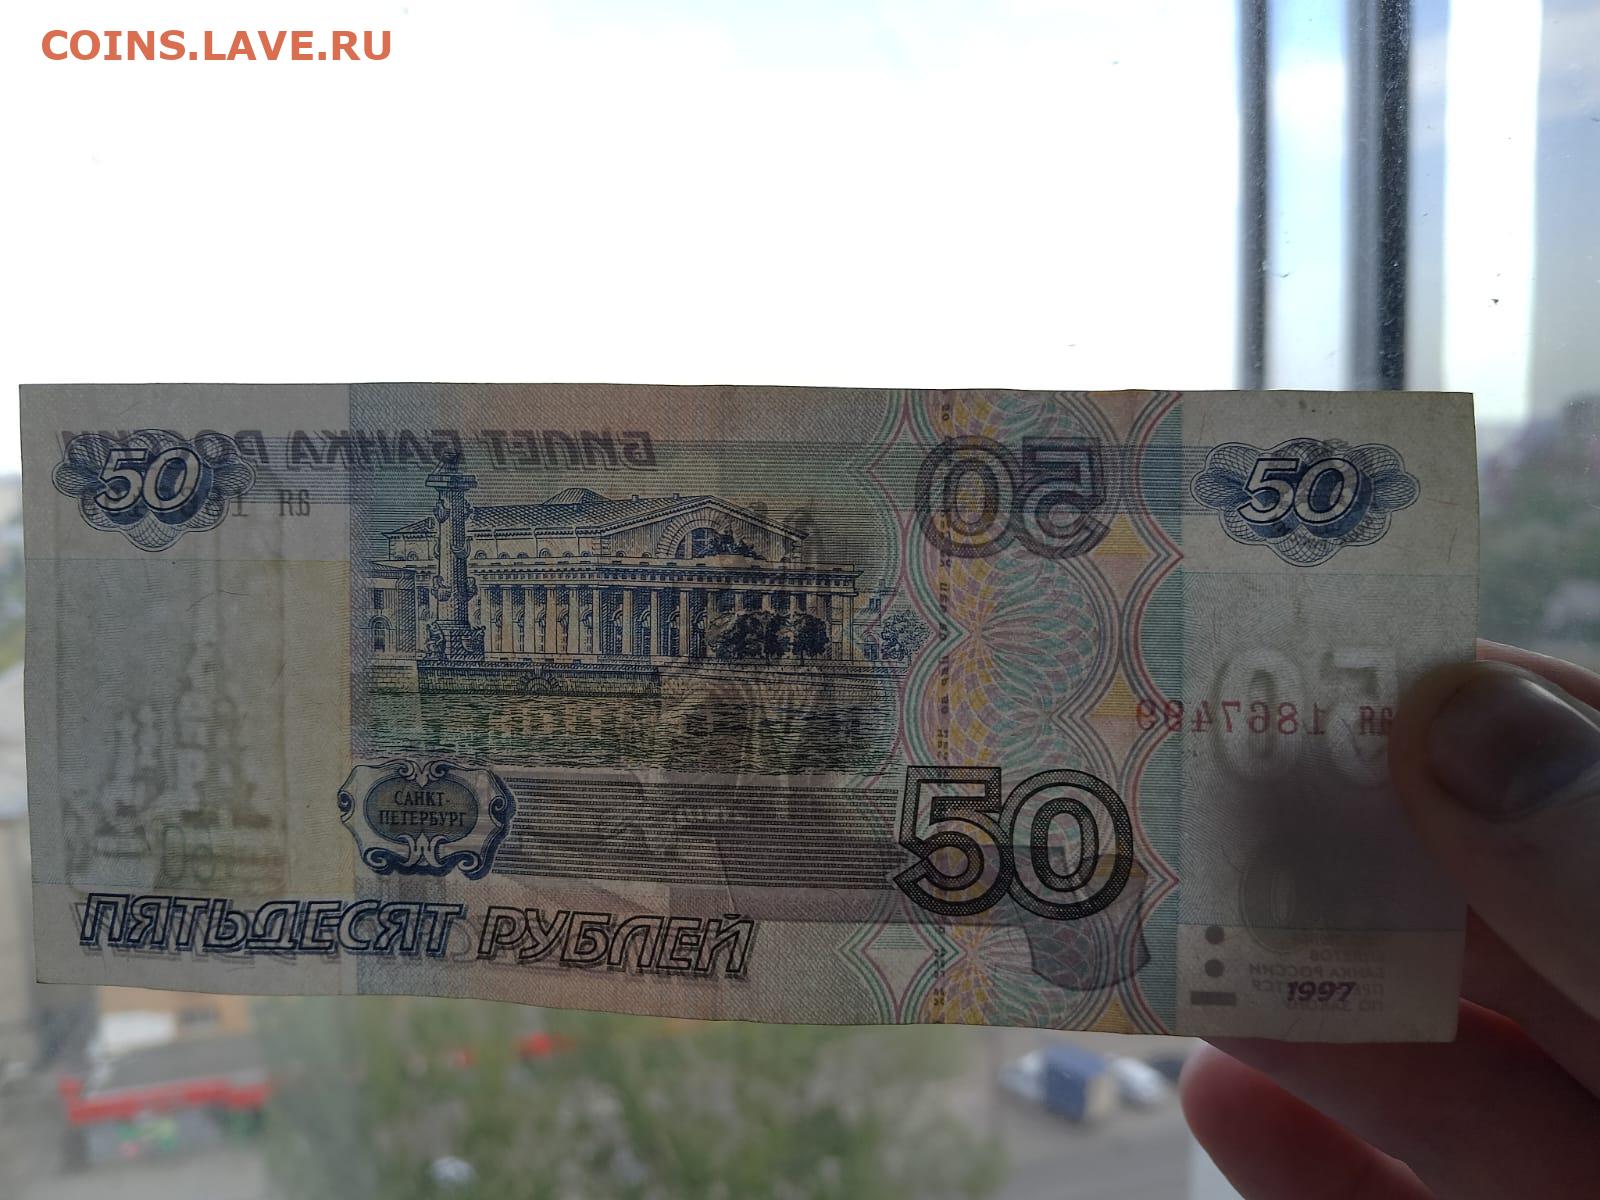 50 рублей на steam фото 46